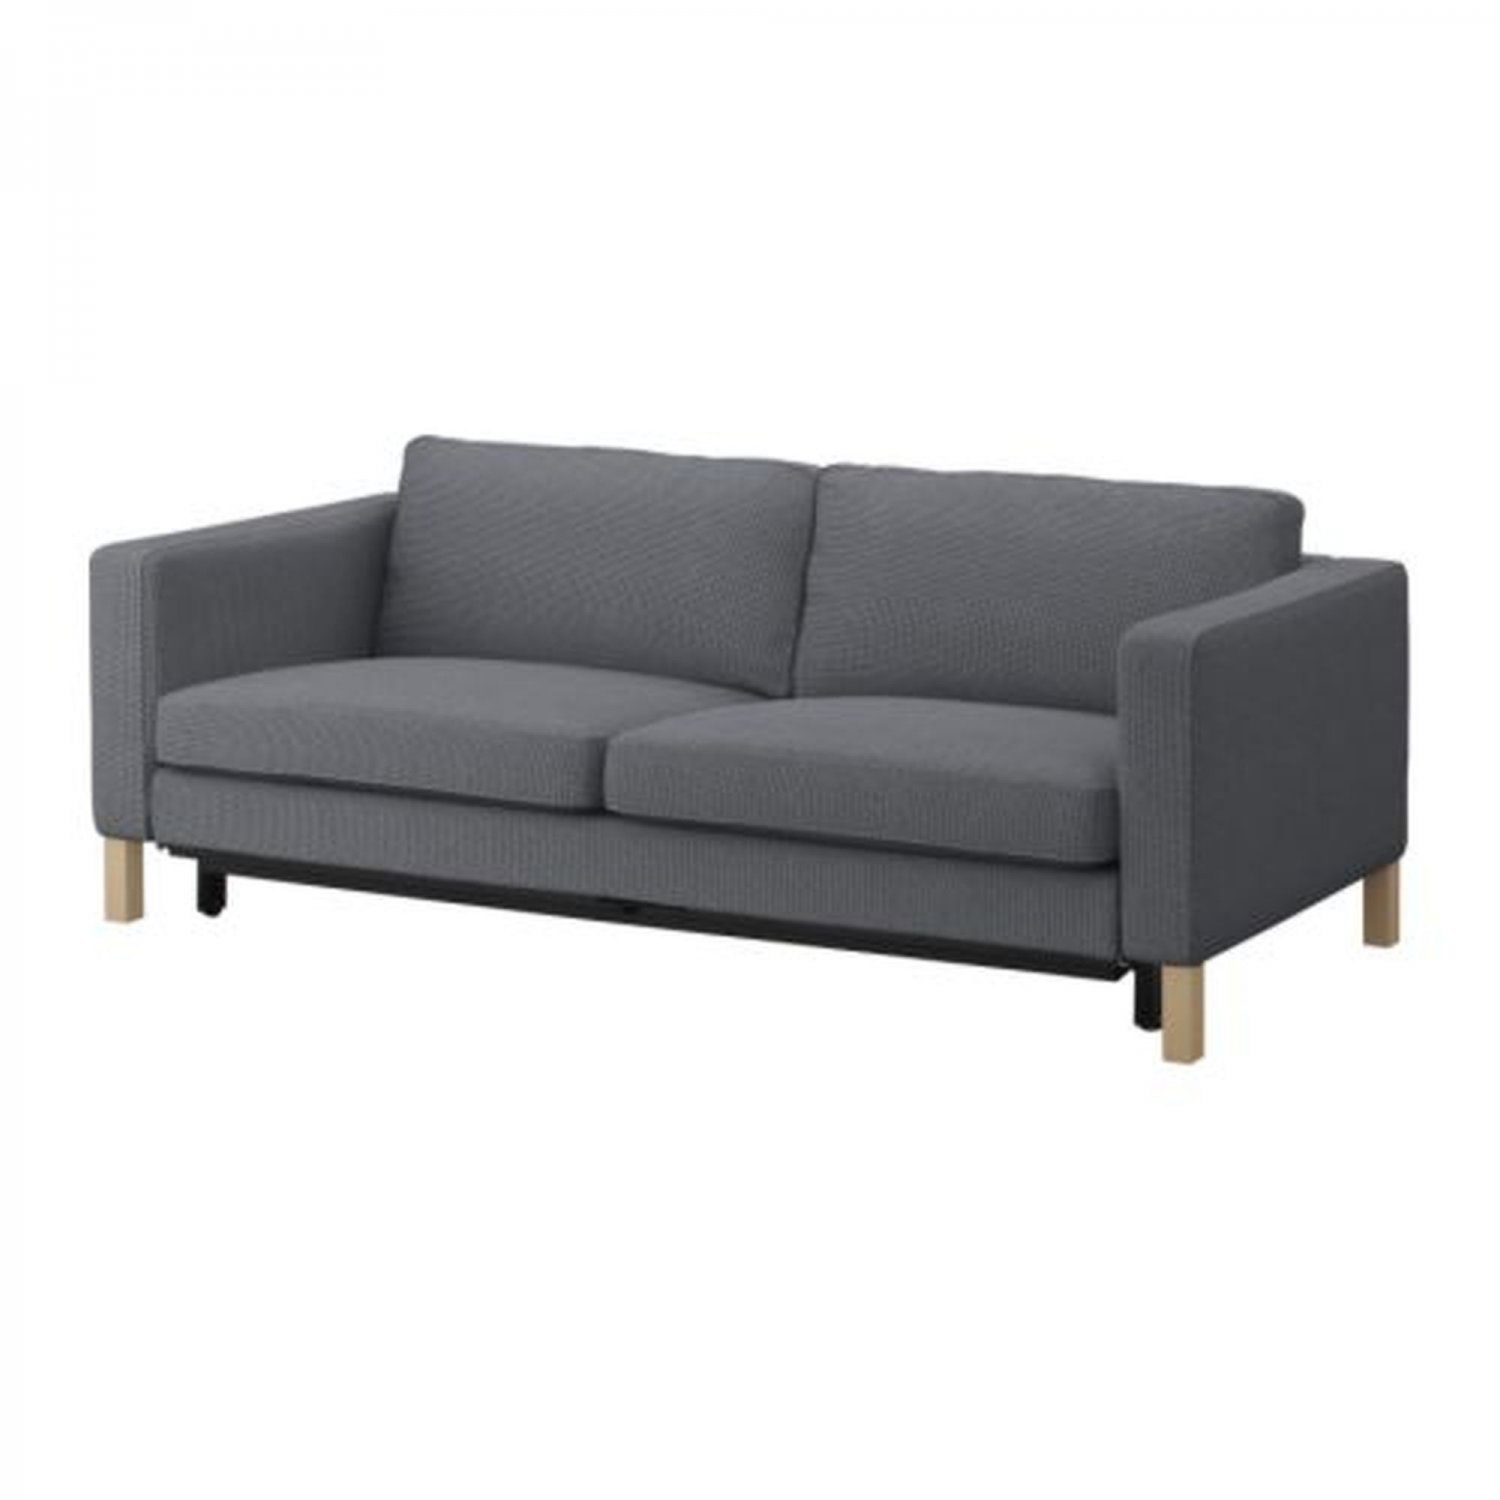  Ikea  KARLSTAD Sofa  Bed  Sofabed SLIPCOVER Cover KORNDAL 